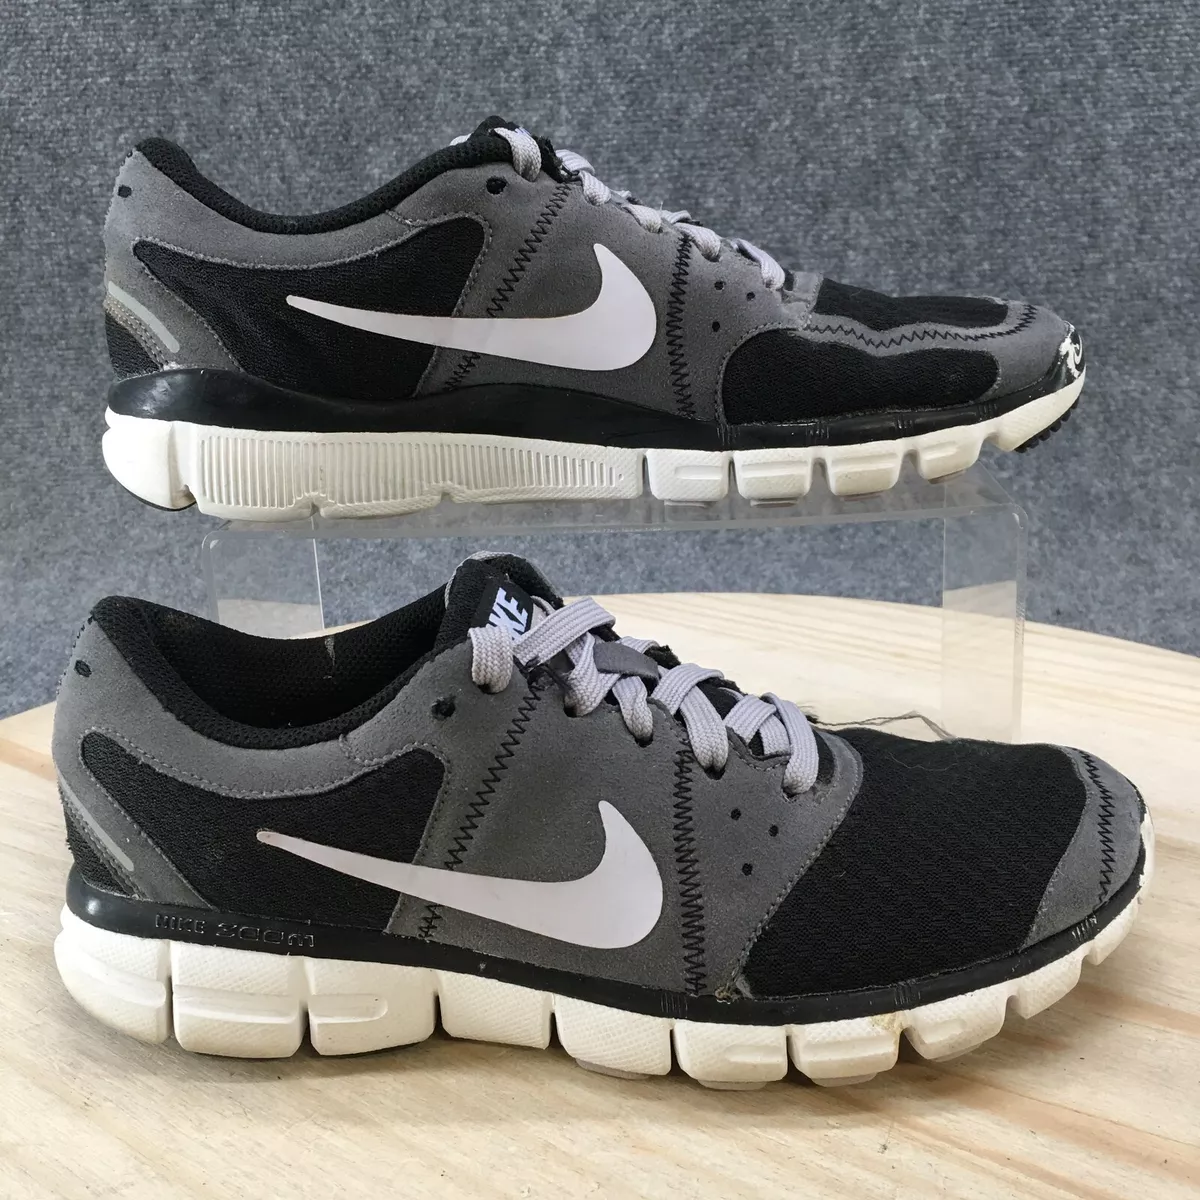 Nike Shoes Womens 8.5 2 Running Sneakers Gray Mesh Up | eBay